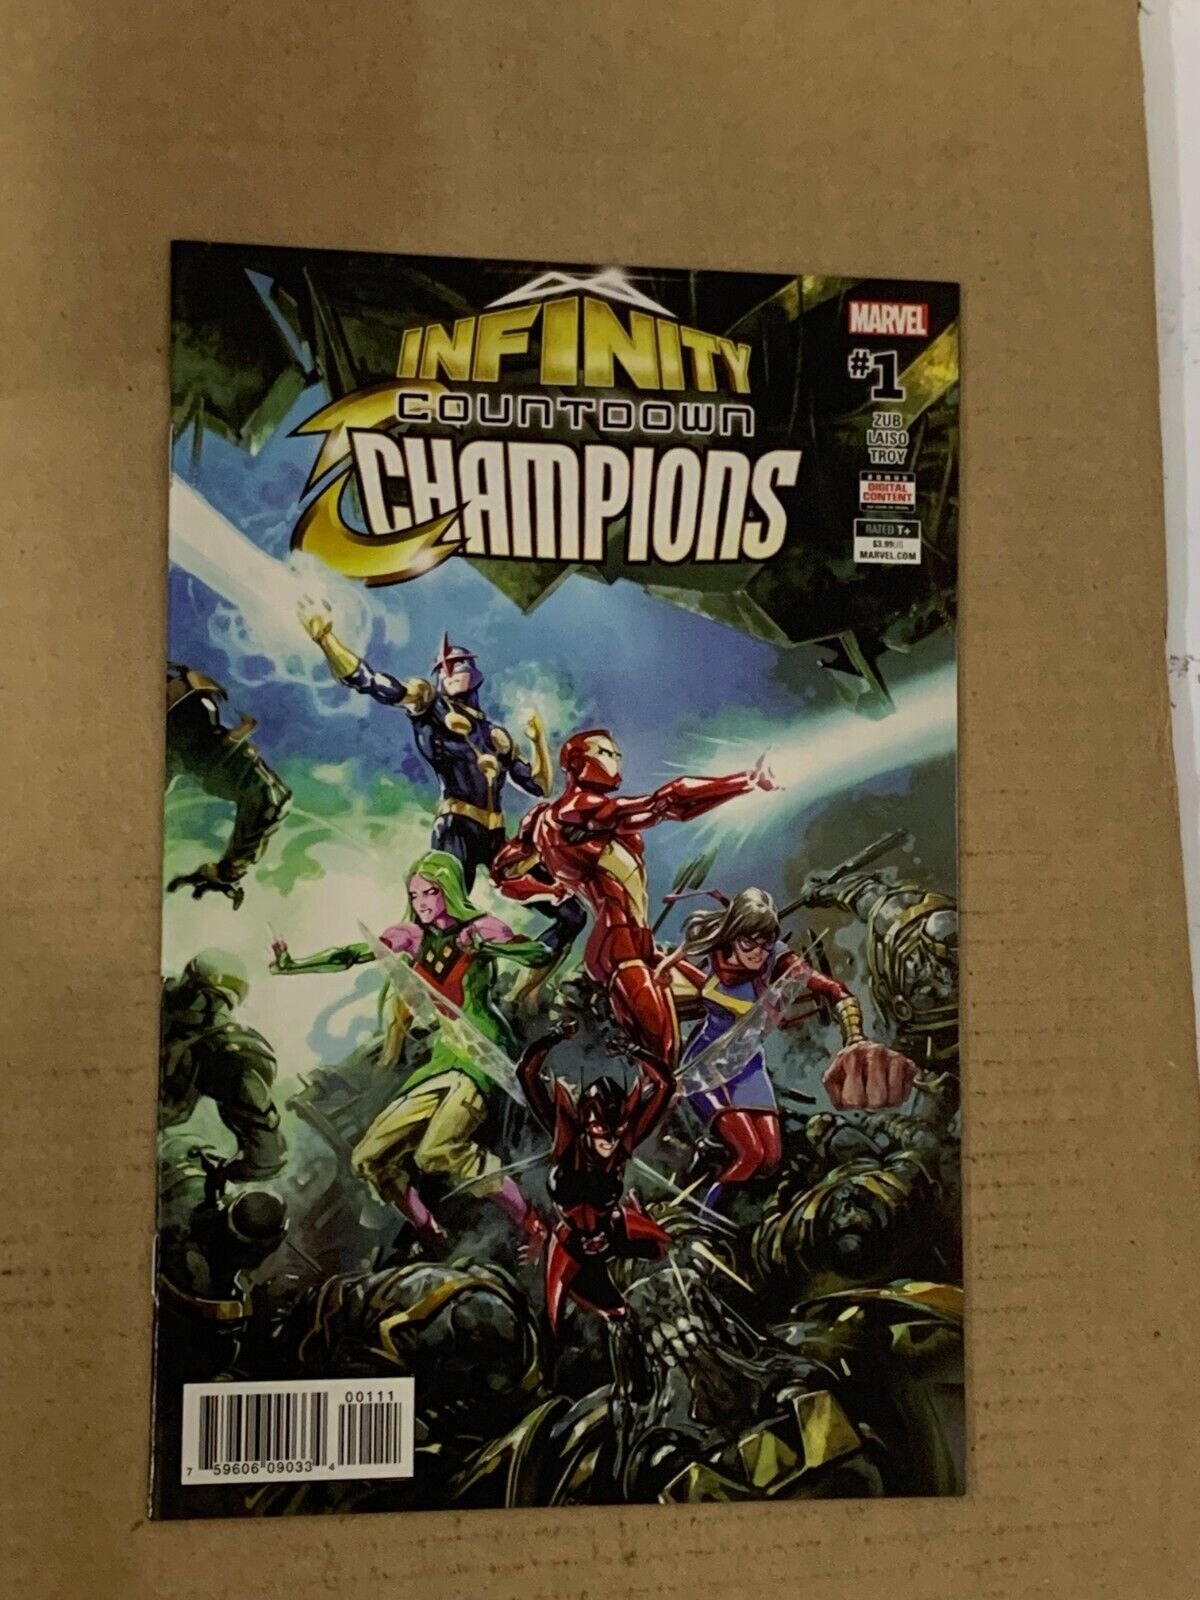 Infinity Countdown: Champions #1 (Marvel Comics. 2018)